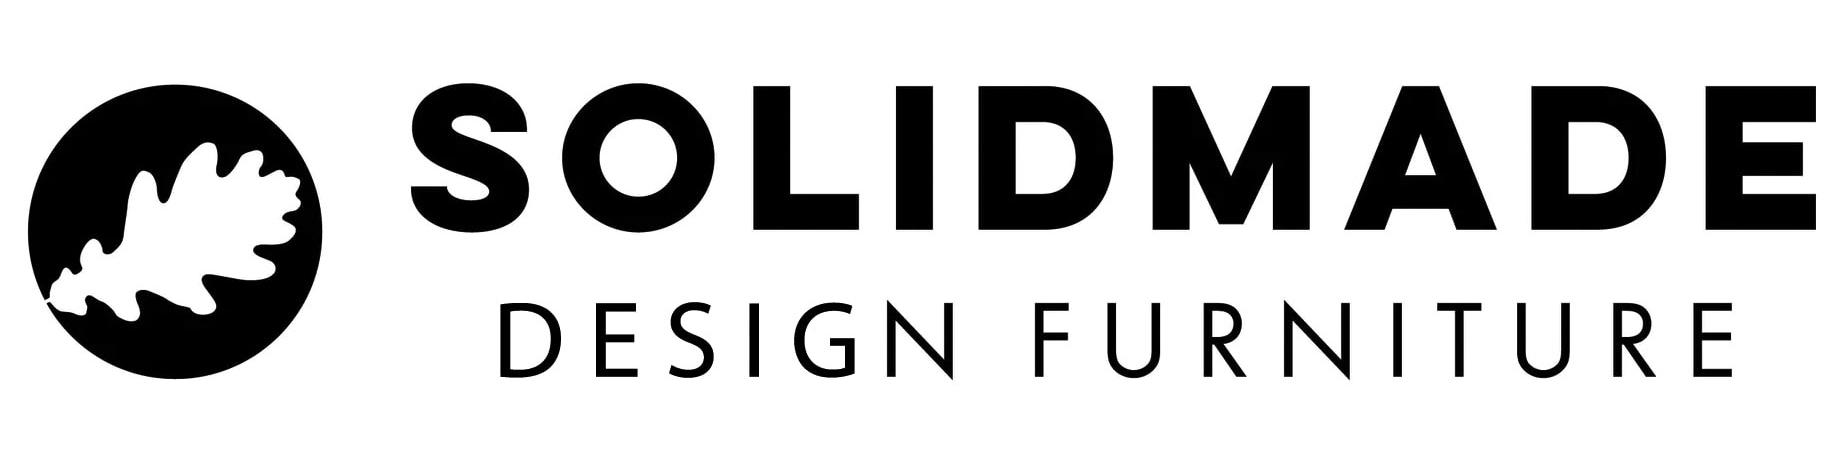 SOLIDMADE - Design Furniture